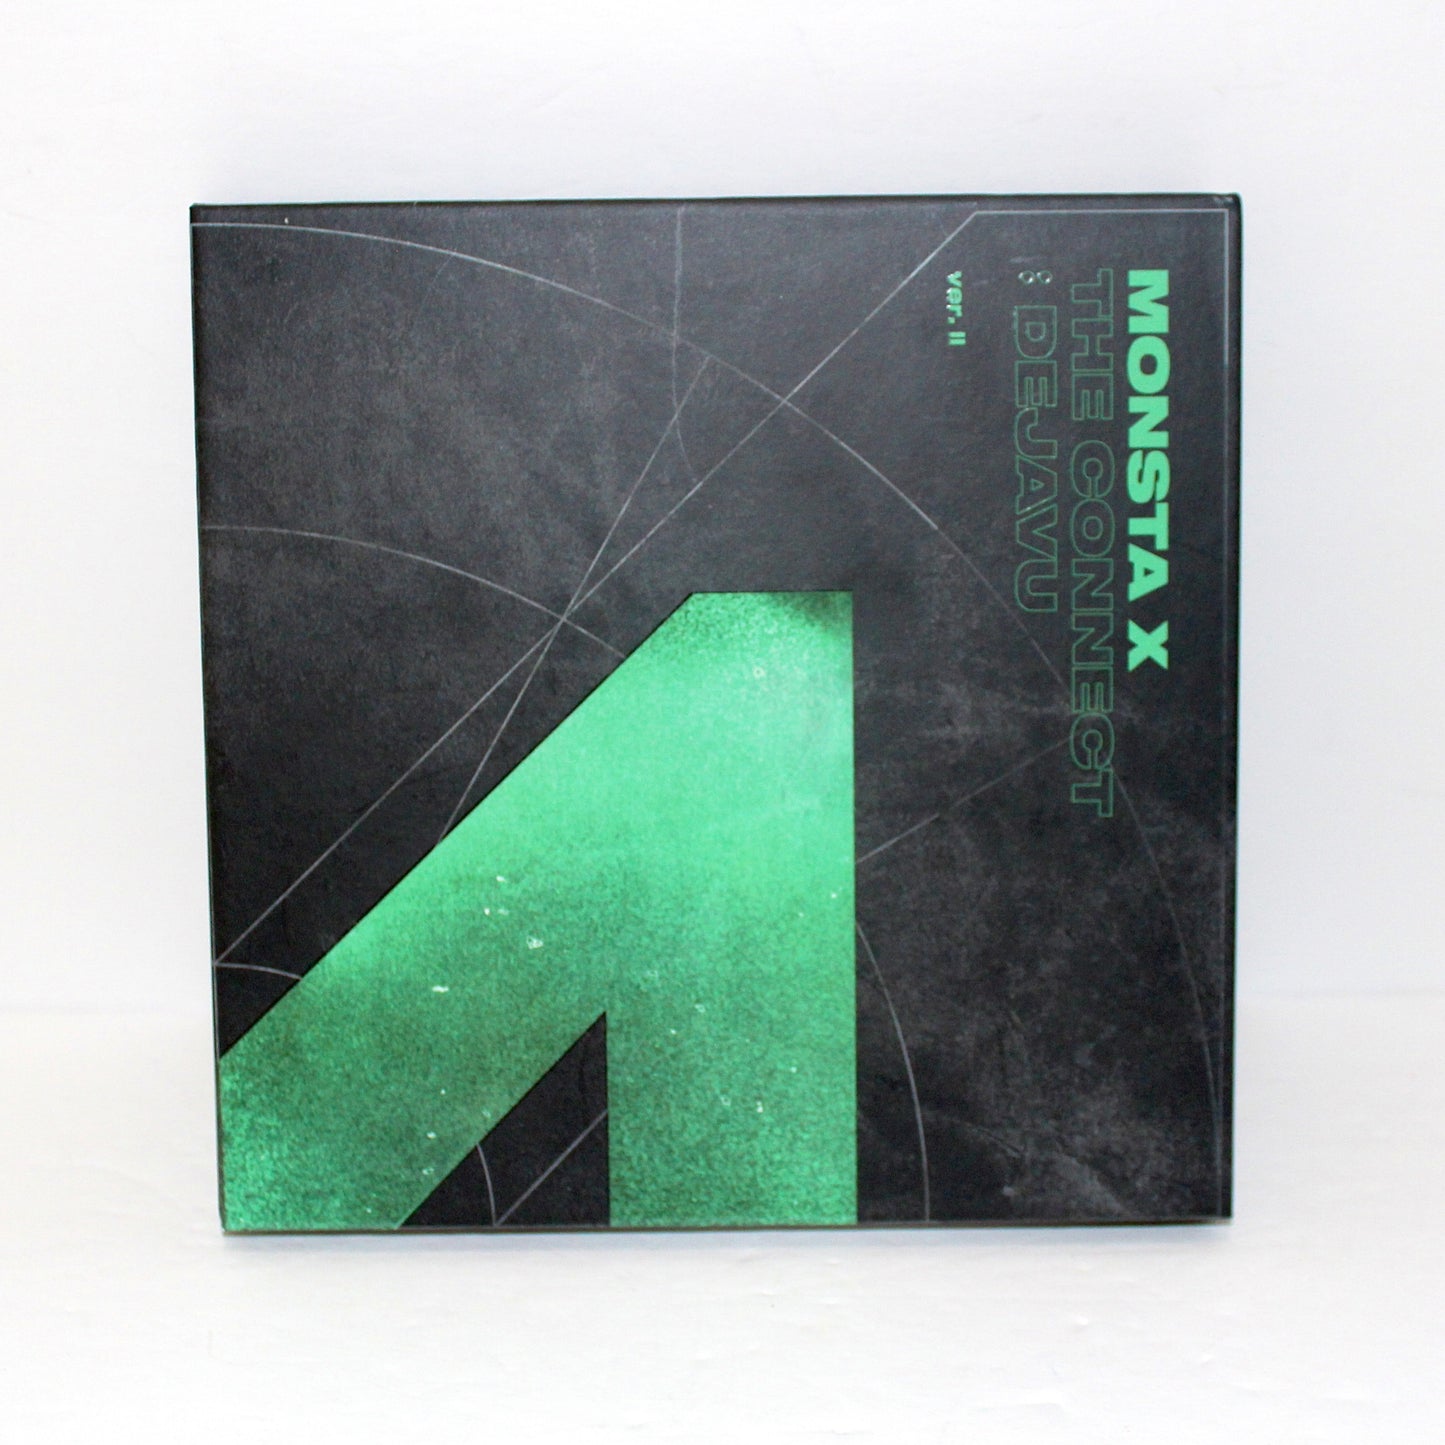 MONSTA X 6ème mini album : The Connect : Dejavu - Ver. 4